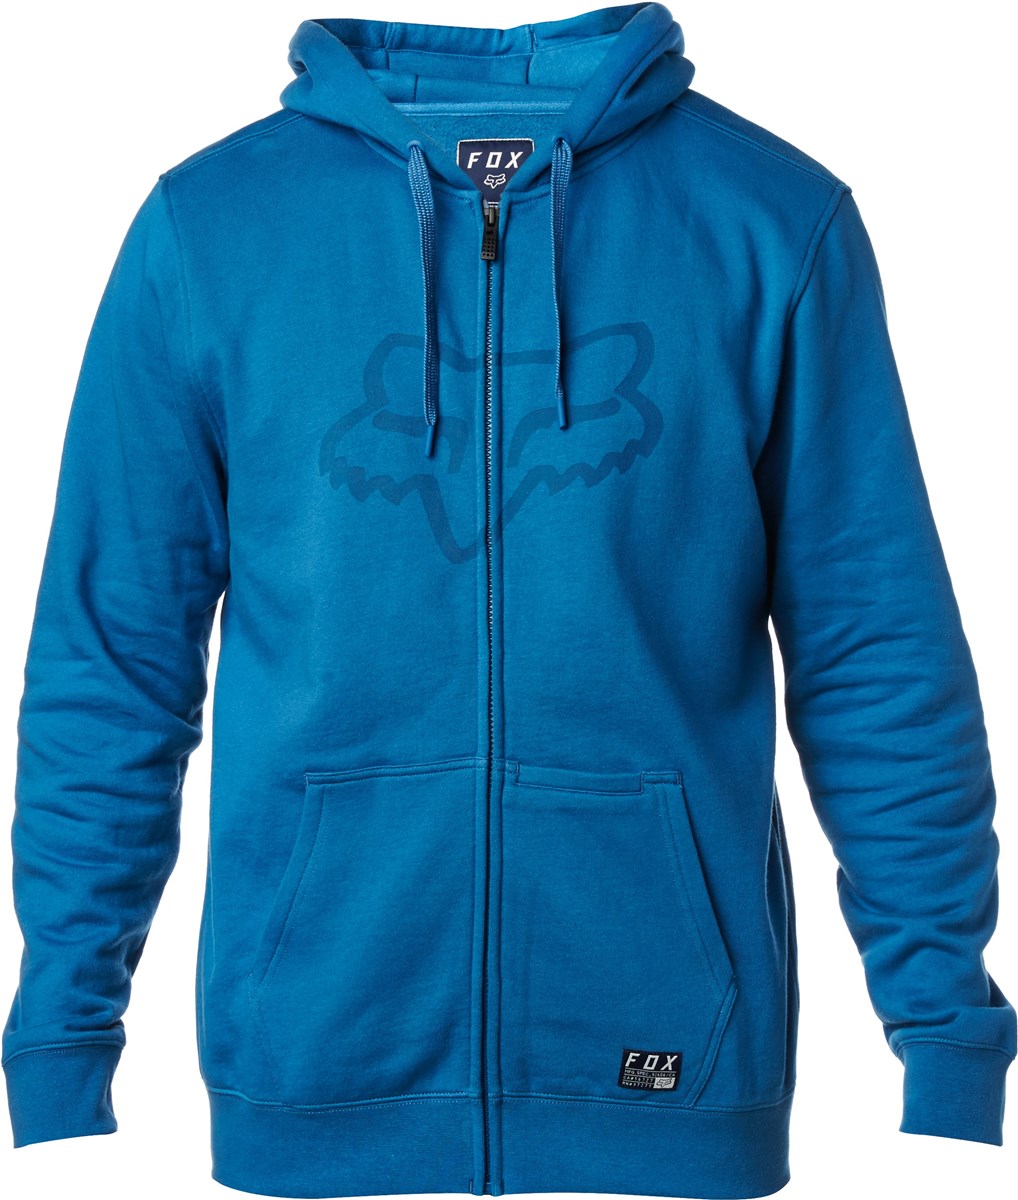 Fox Clothing District 3 Zip Fleece AW17 product image